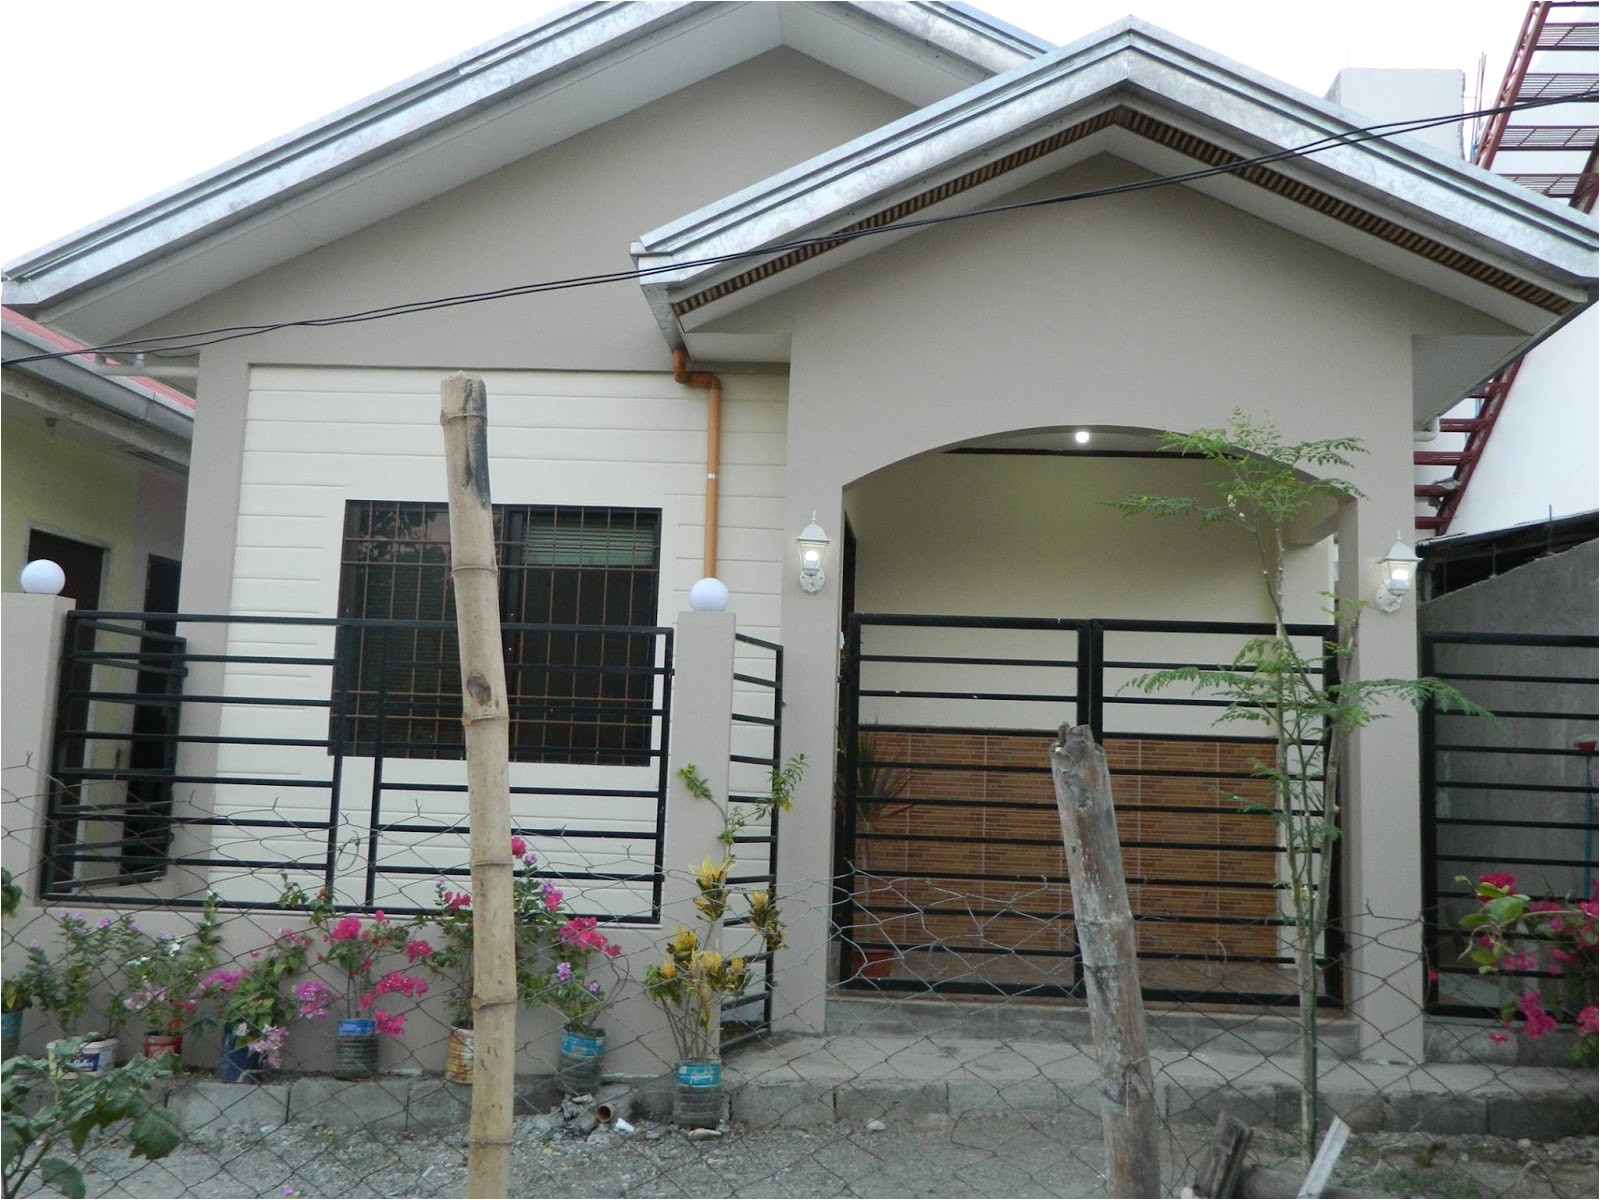  House  Plans  Under  200k  to Build Philippines plougonver com